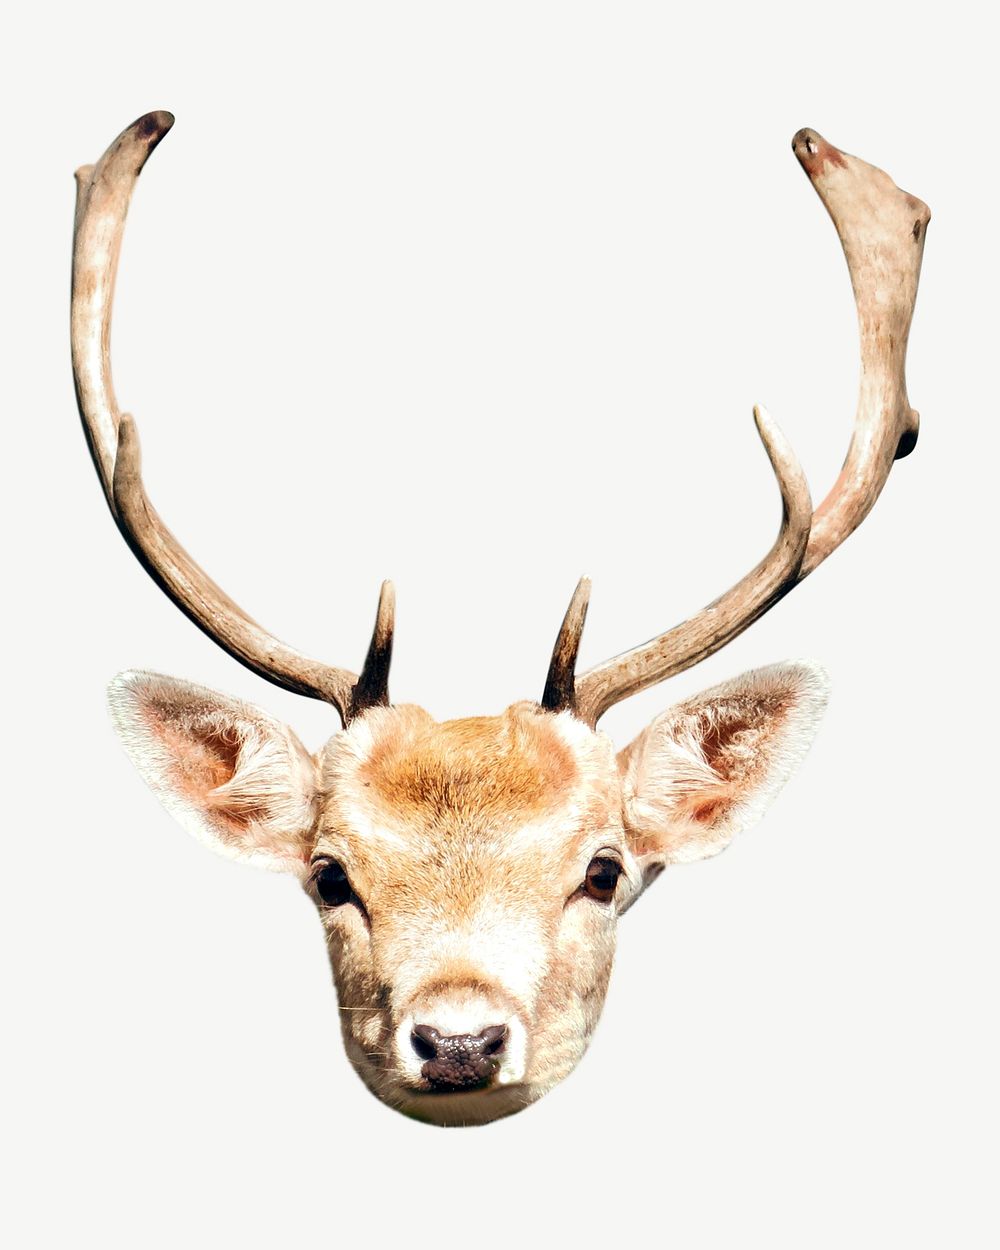 Deer, wildlife collage element psd